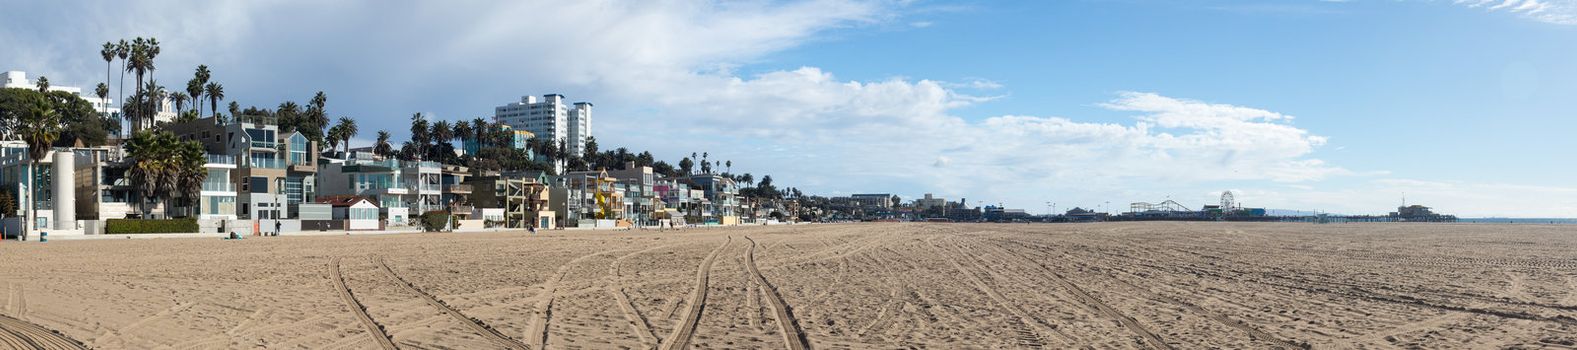 SANTA MONICA, CALIFORNIA - DECEMBER 13: Wide panorama of beachfront and beach of Santa Monica on December 13, 2012.